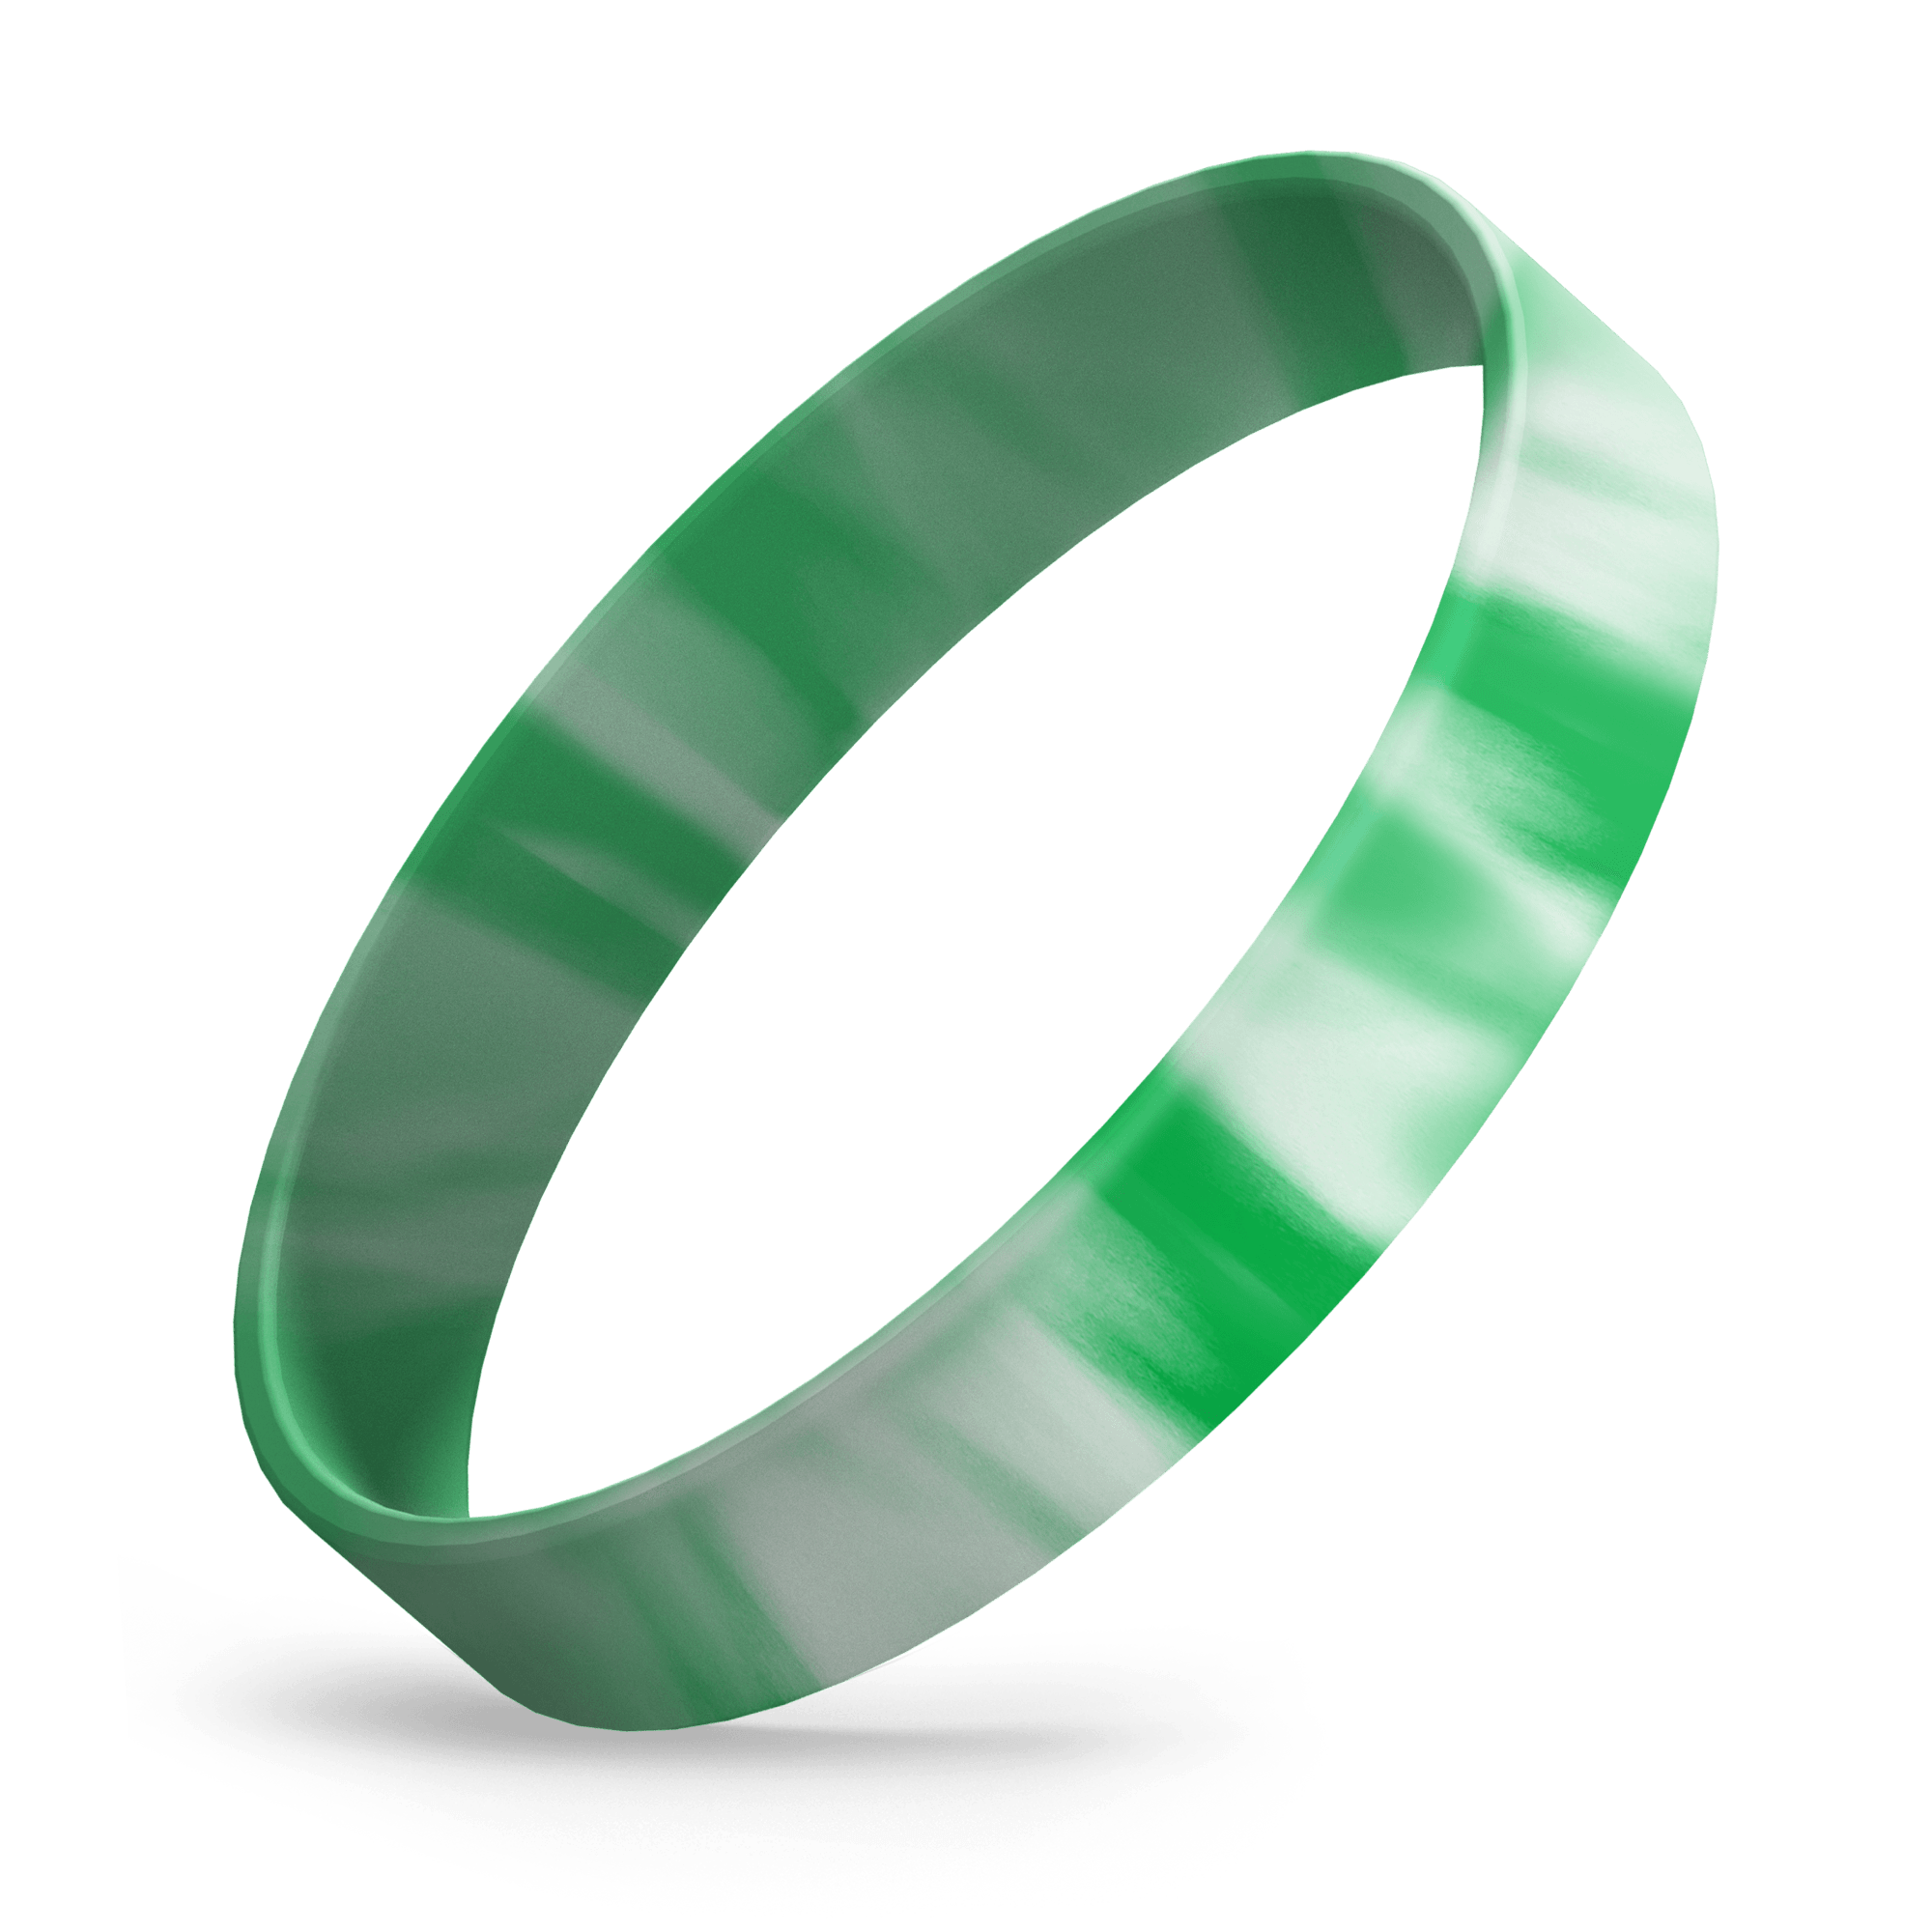 Customized Silicone Wrist Band Printed Rubber| Alibaba.com